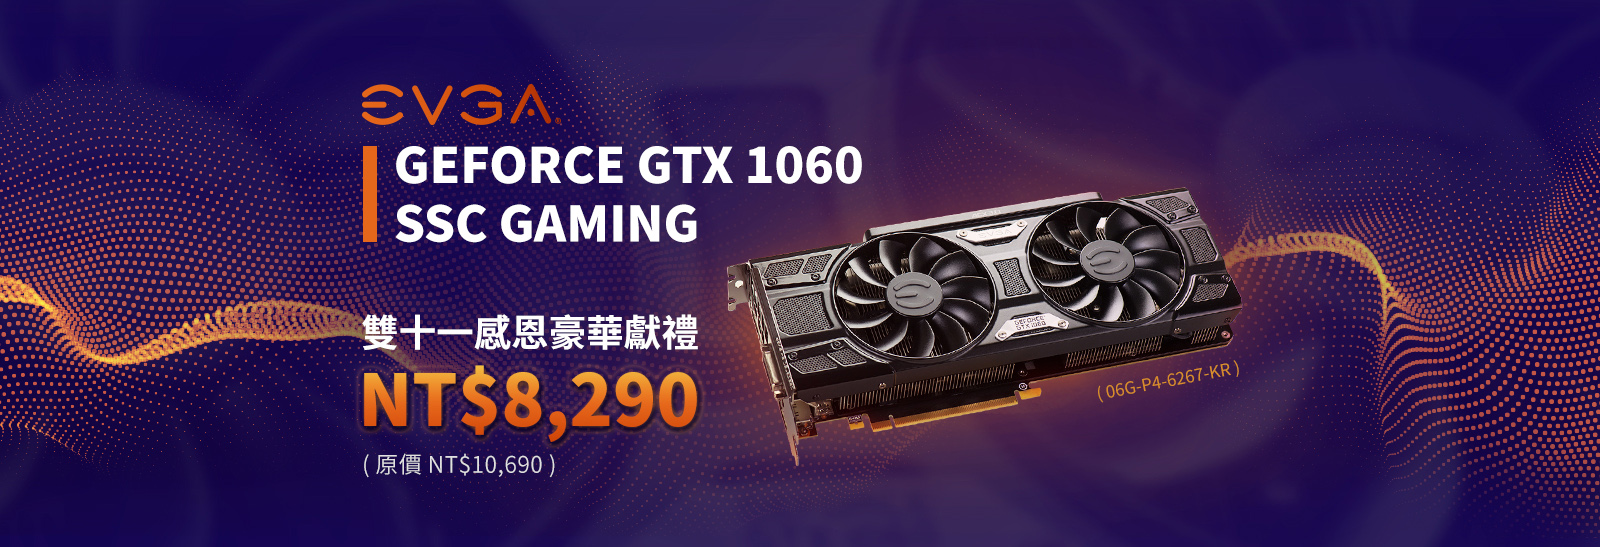 EVGA GeForce GTX 1060 SSC GAMING  雙十一感恩豪華獻禮